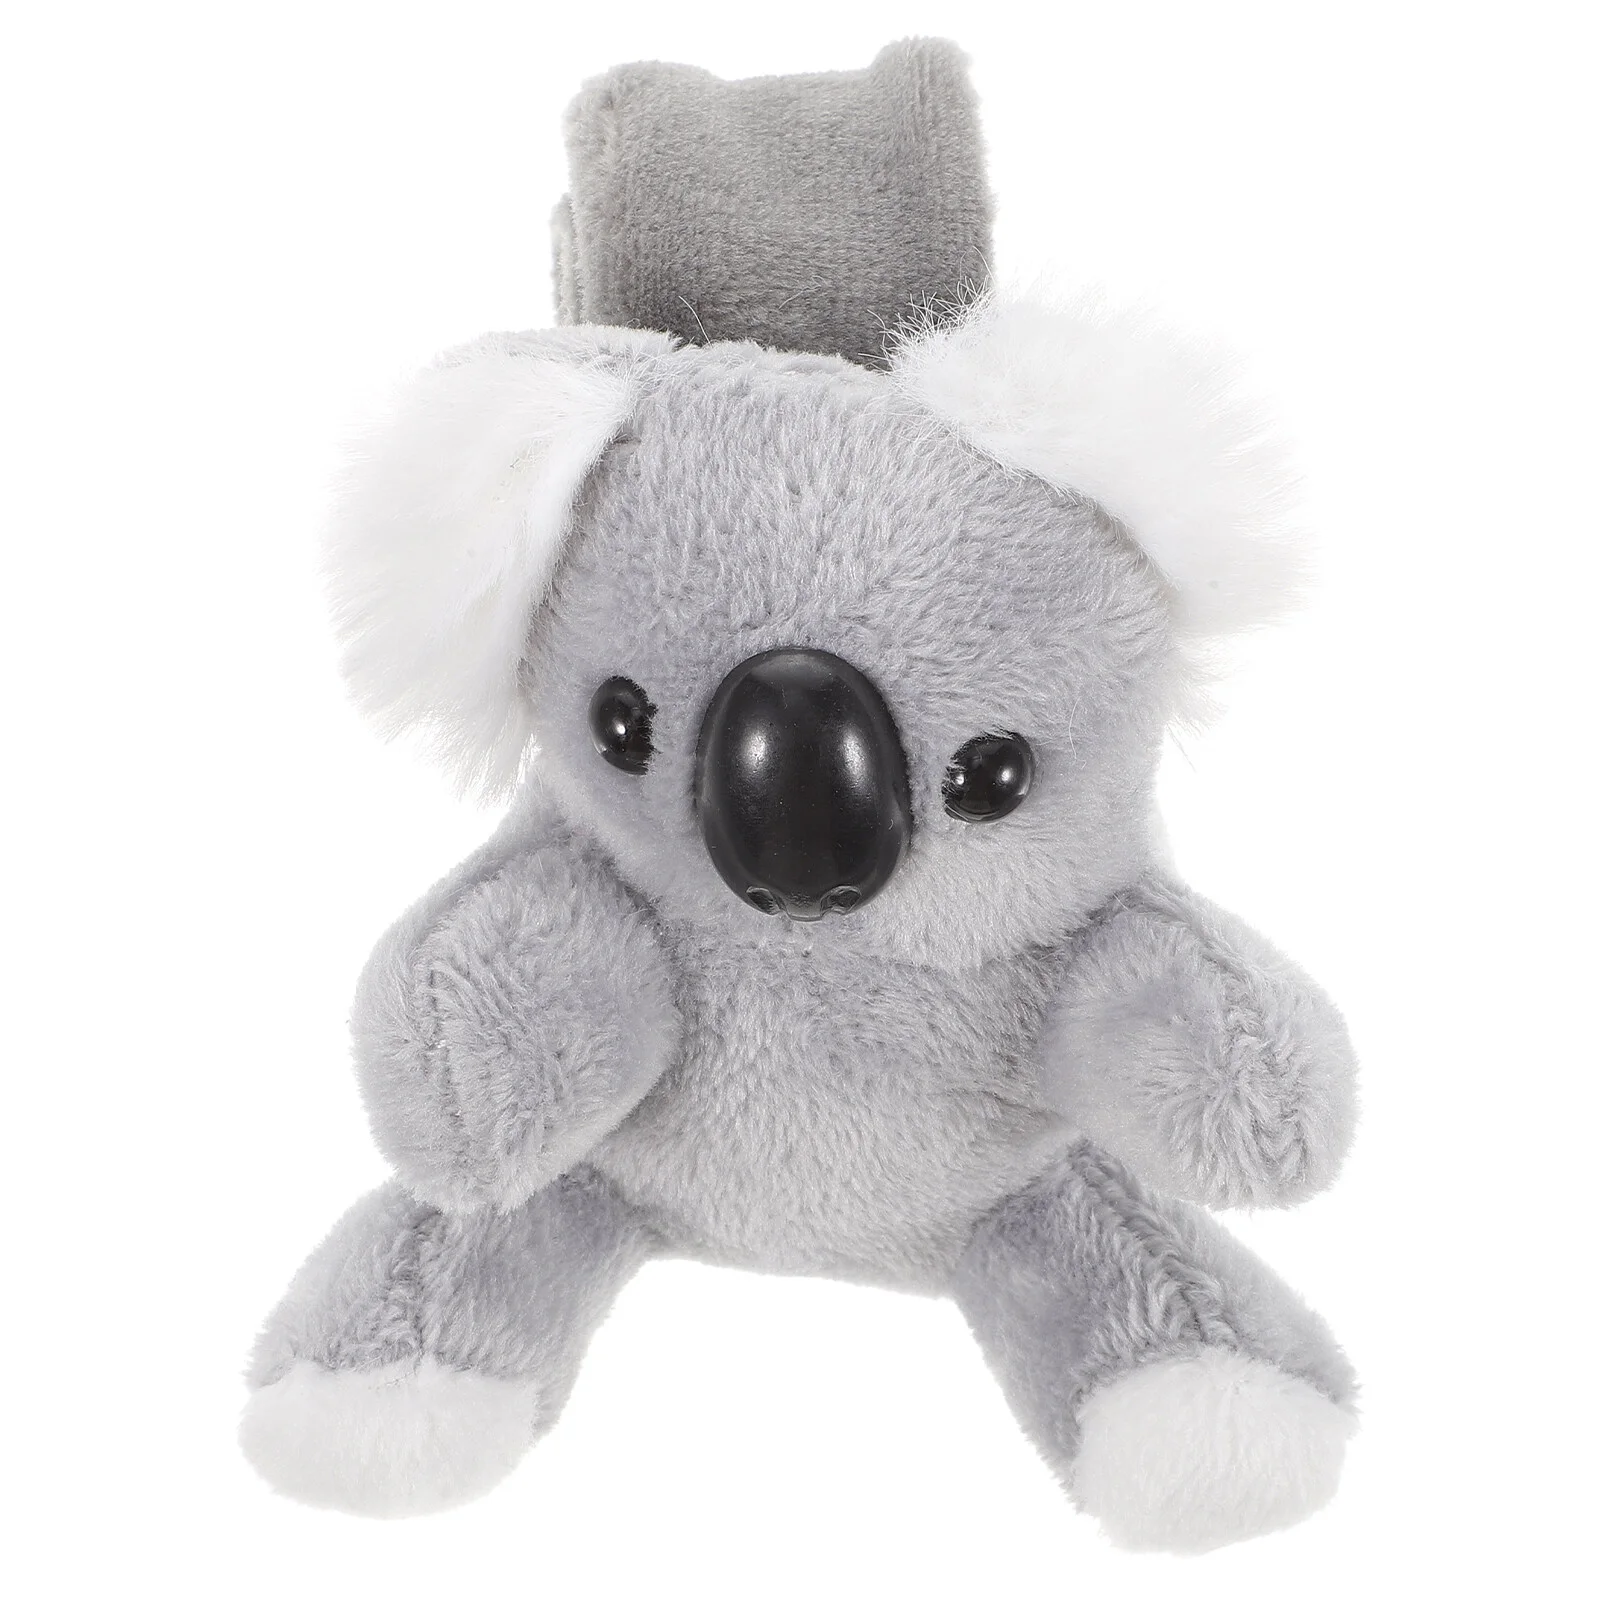 

Plush Ring Kids Birthday Party Favors Classroom Prizes Goodie Bags Fillers Stuffed Animals Slap Bracelets Koala